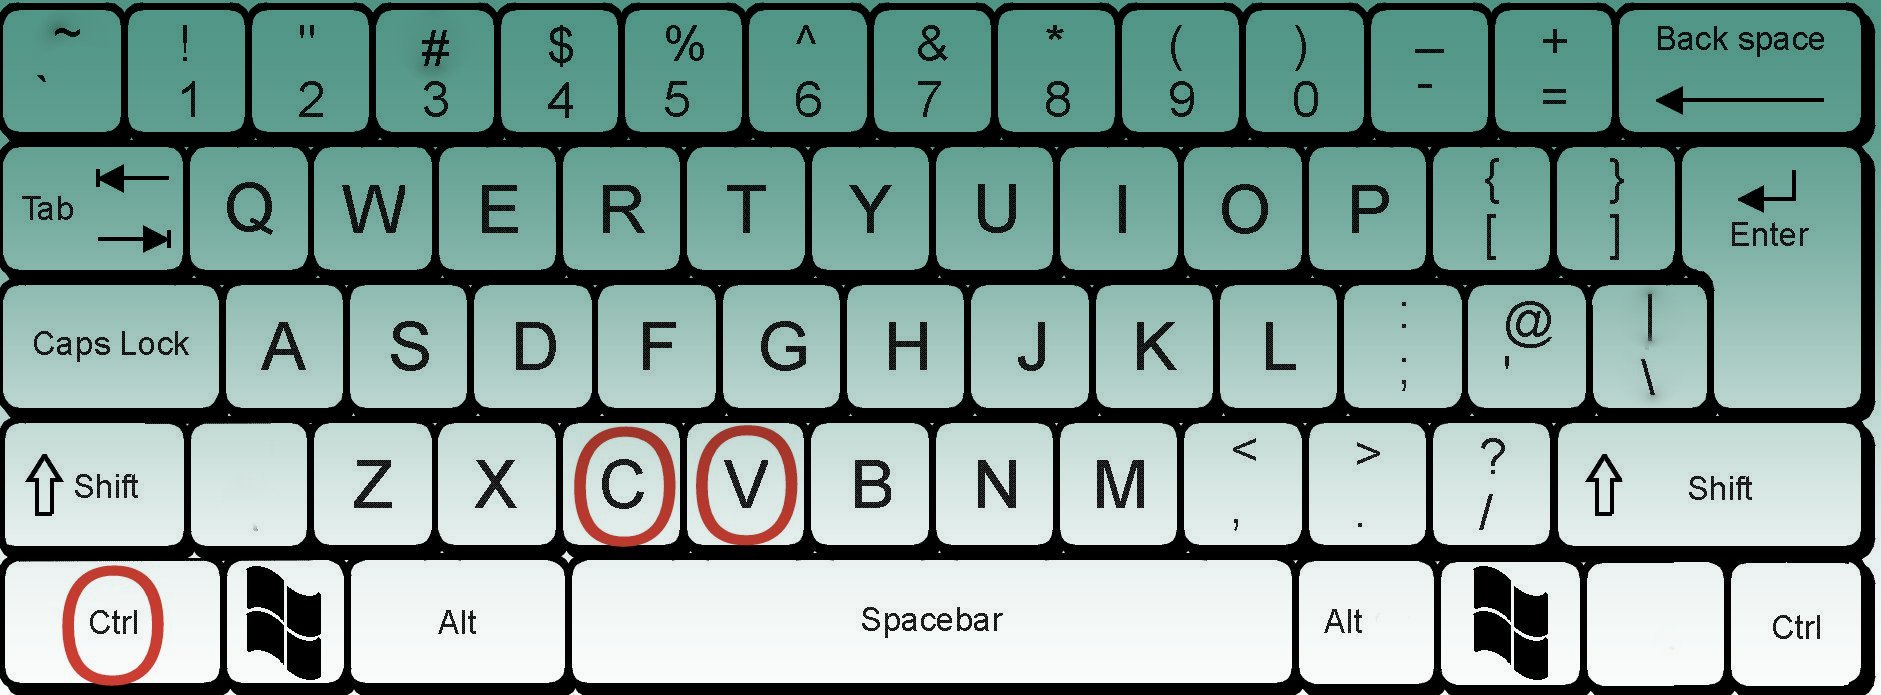 stackoverflow copy paste keyboard